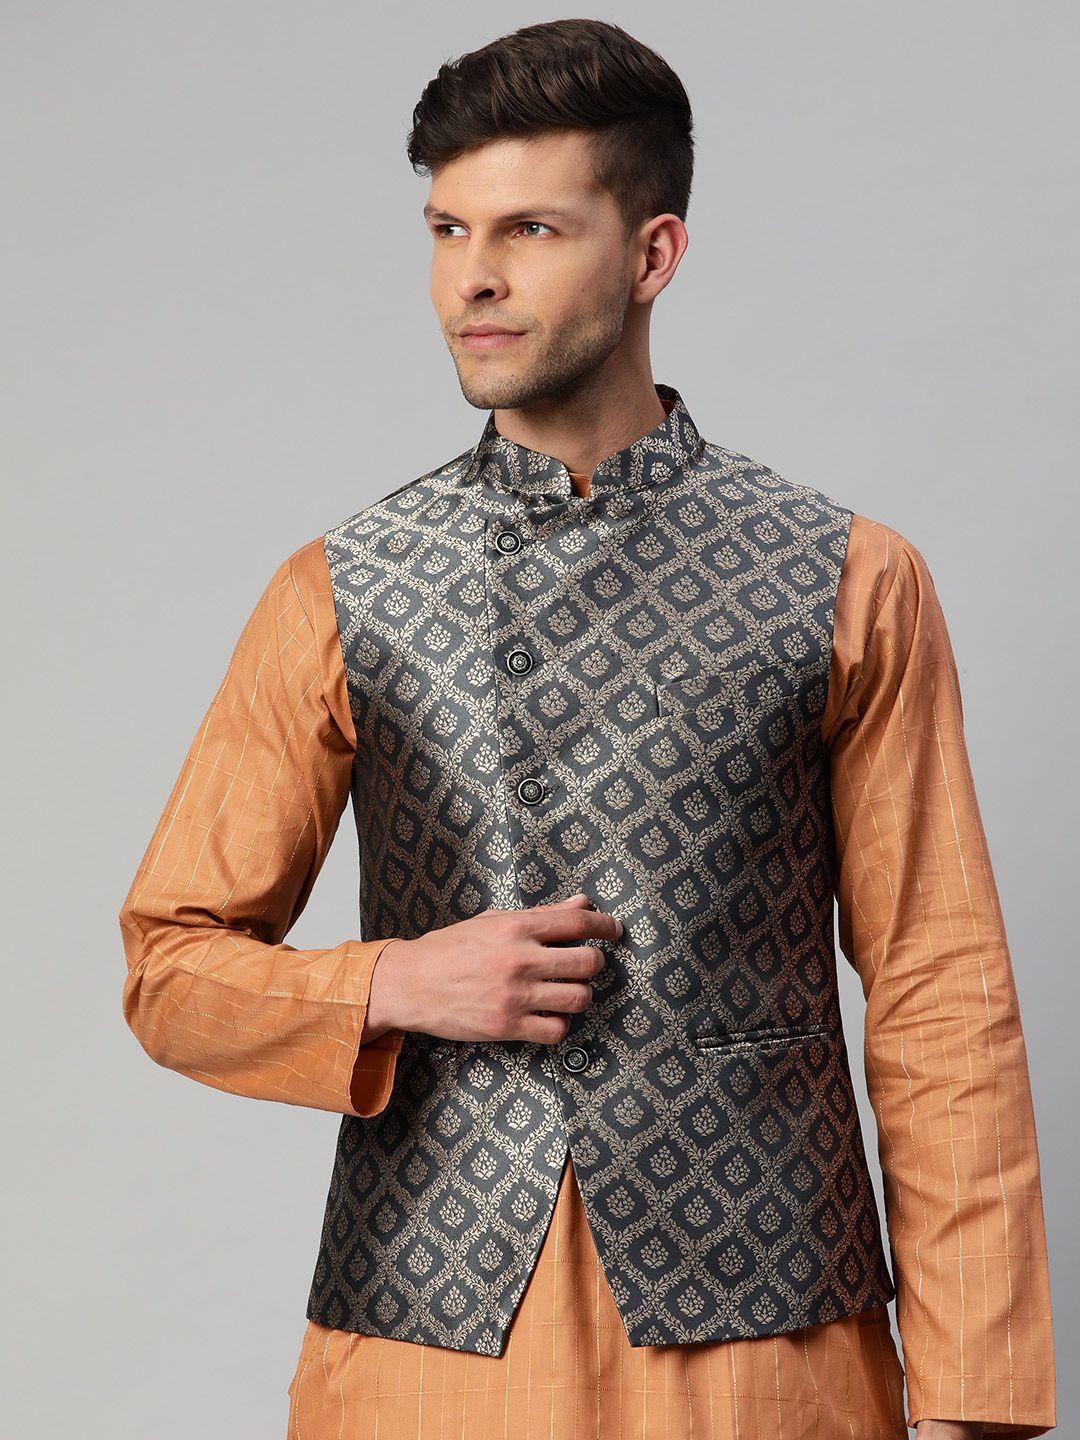 MANQ Men Charcoal Grey & Gold Ethnic Motifs Jaquard Woven Design Nehru jacket